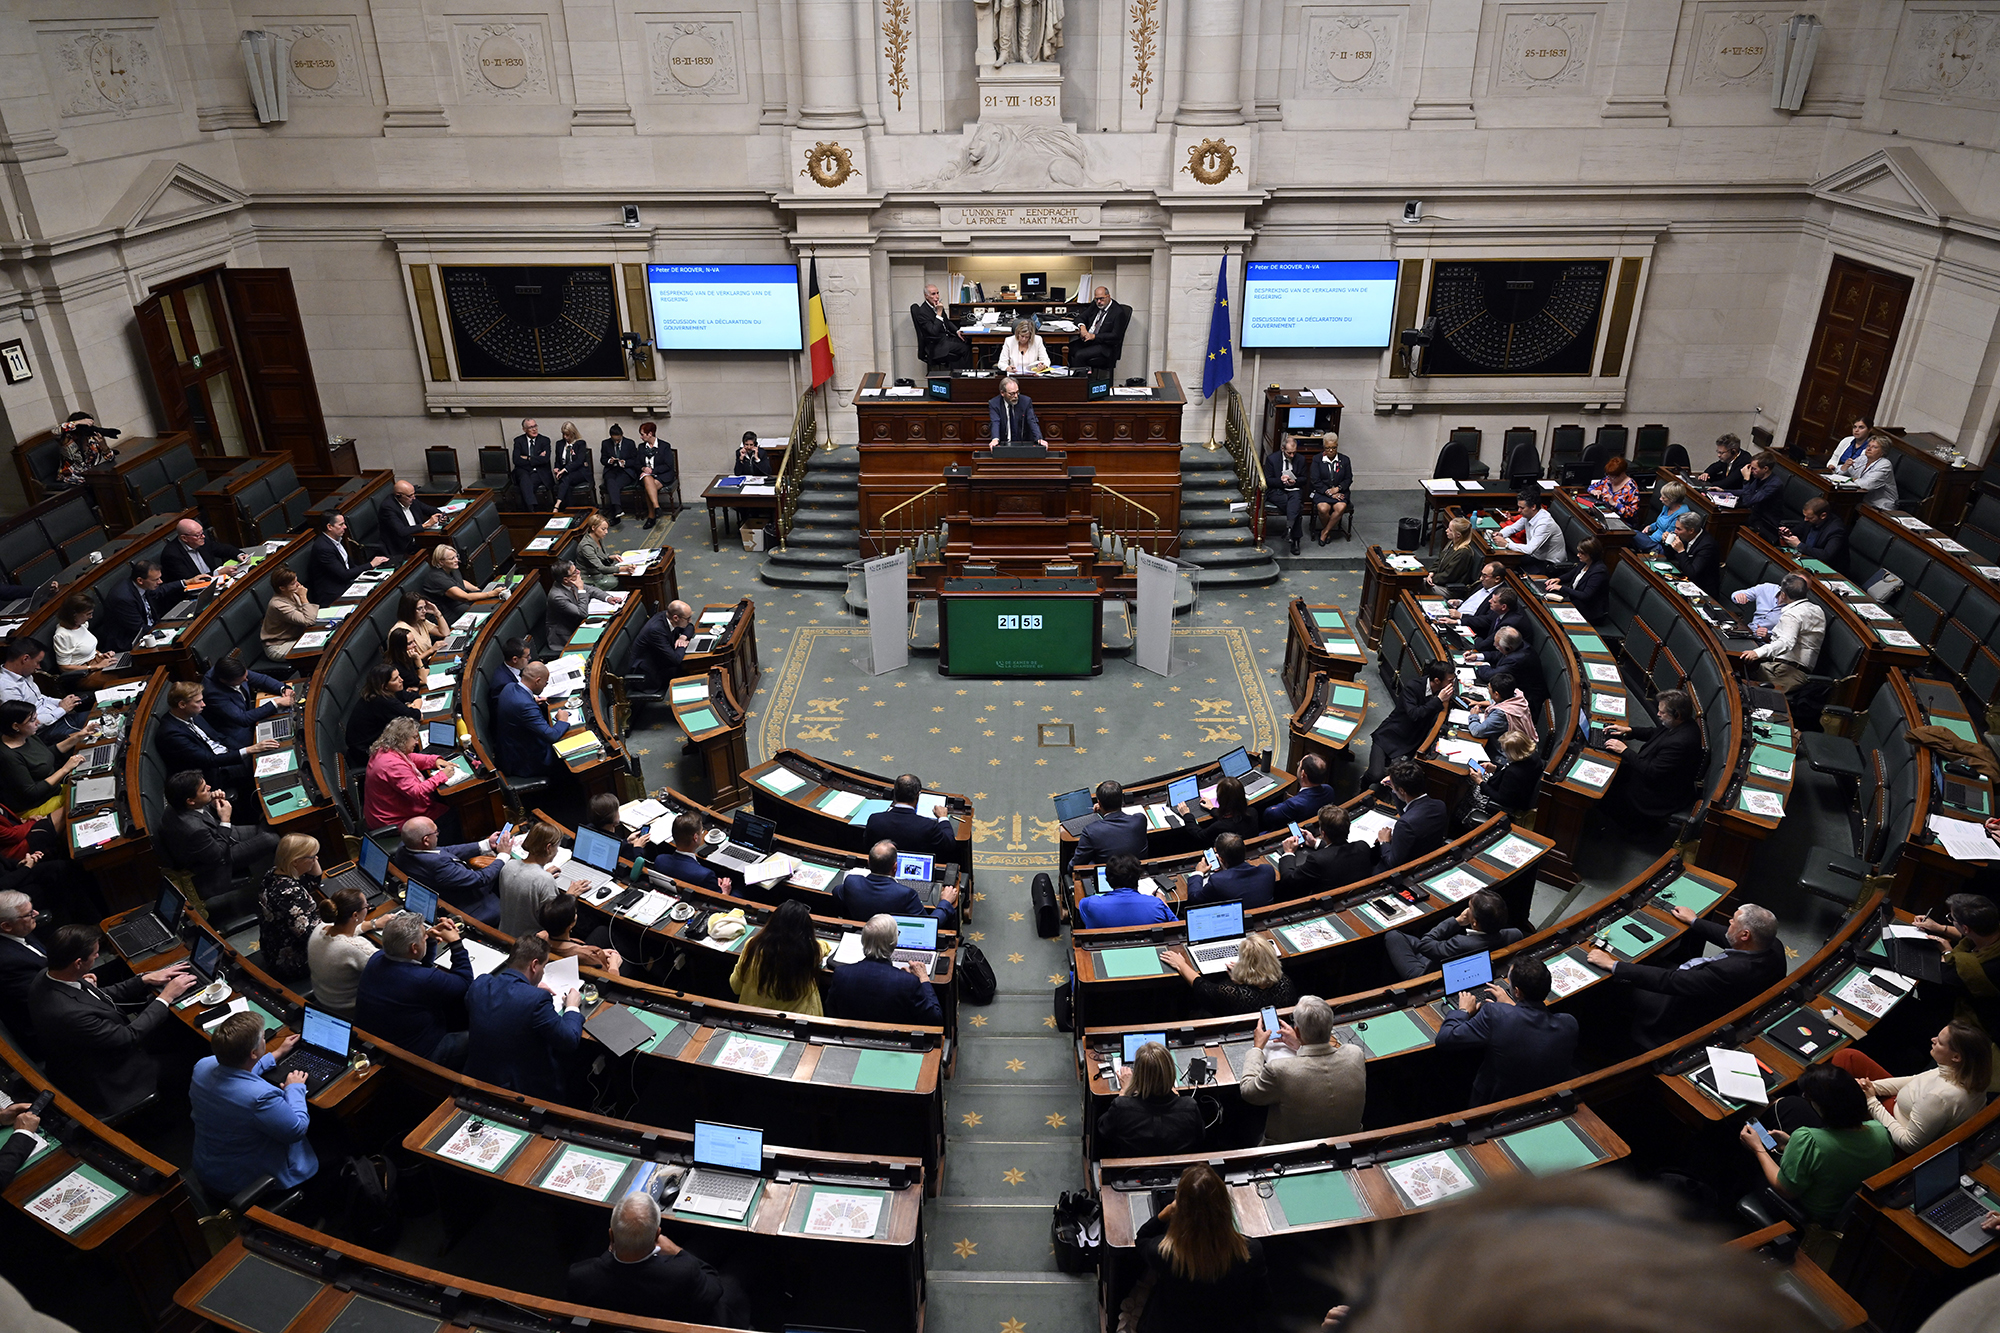 Debatte in der Kammer (Bild: Eric Lalmand/Belga)